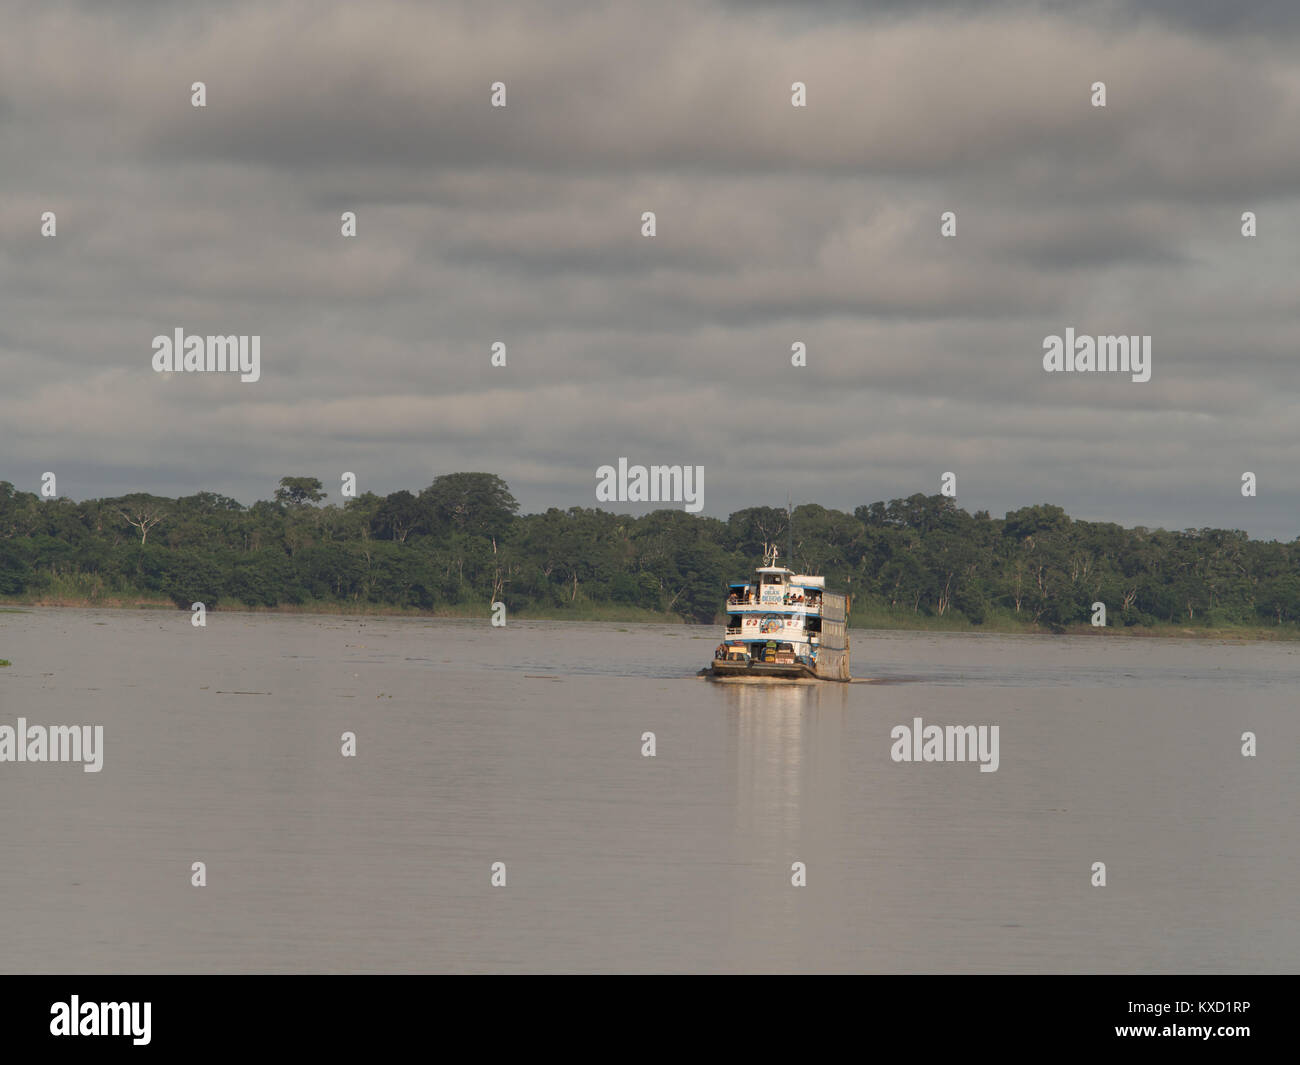 Amazon River, Peru - Dec 12, 2017: Cargo boat in the middle of Amazon river Stock Photo